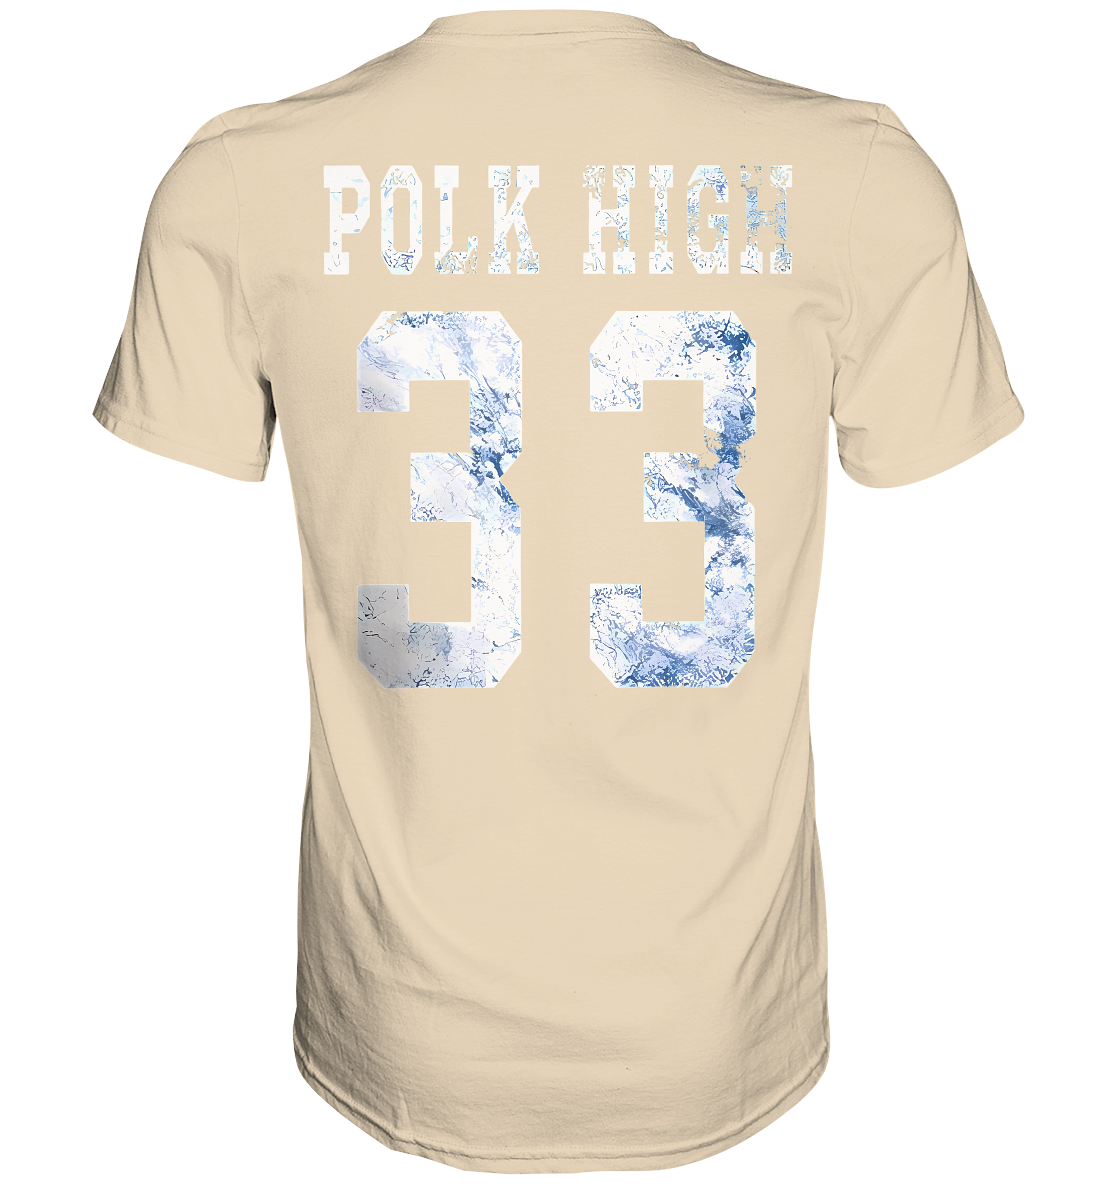 Football Unity Polk High - Premium Shirt - Football Unity Football Unity